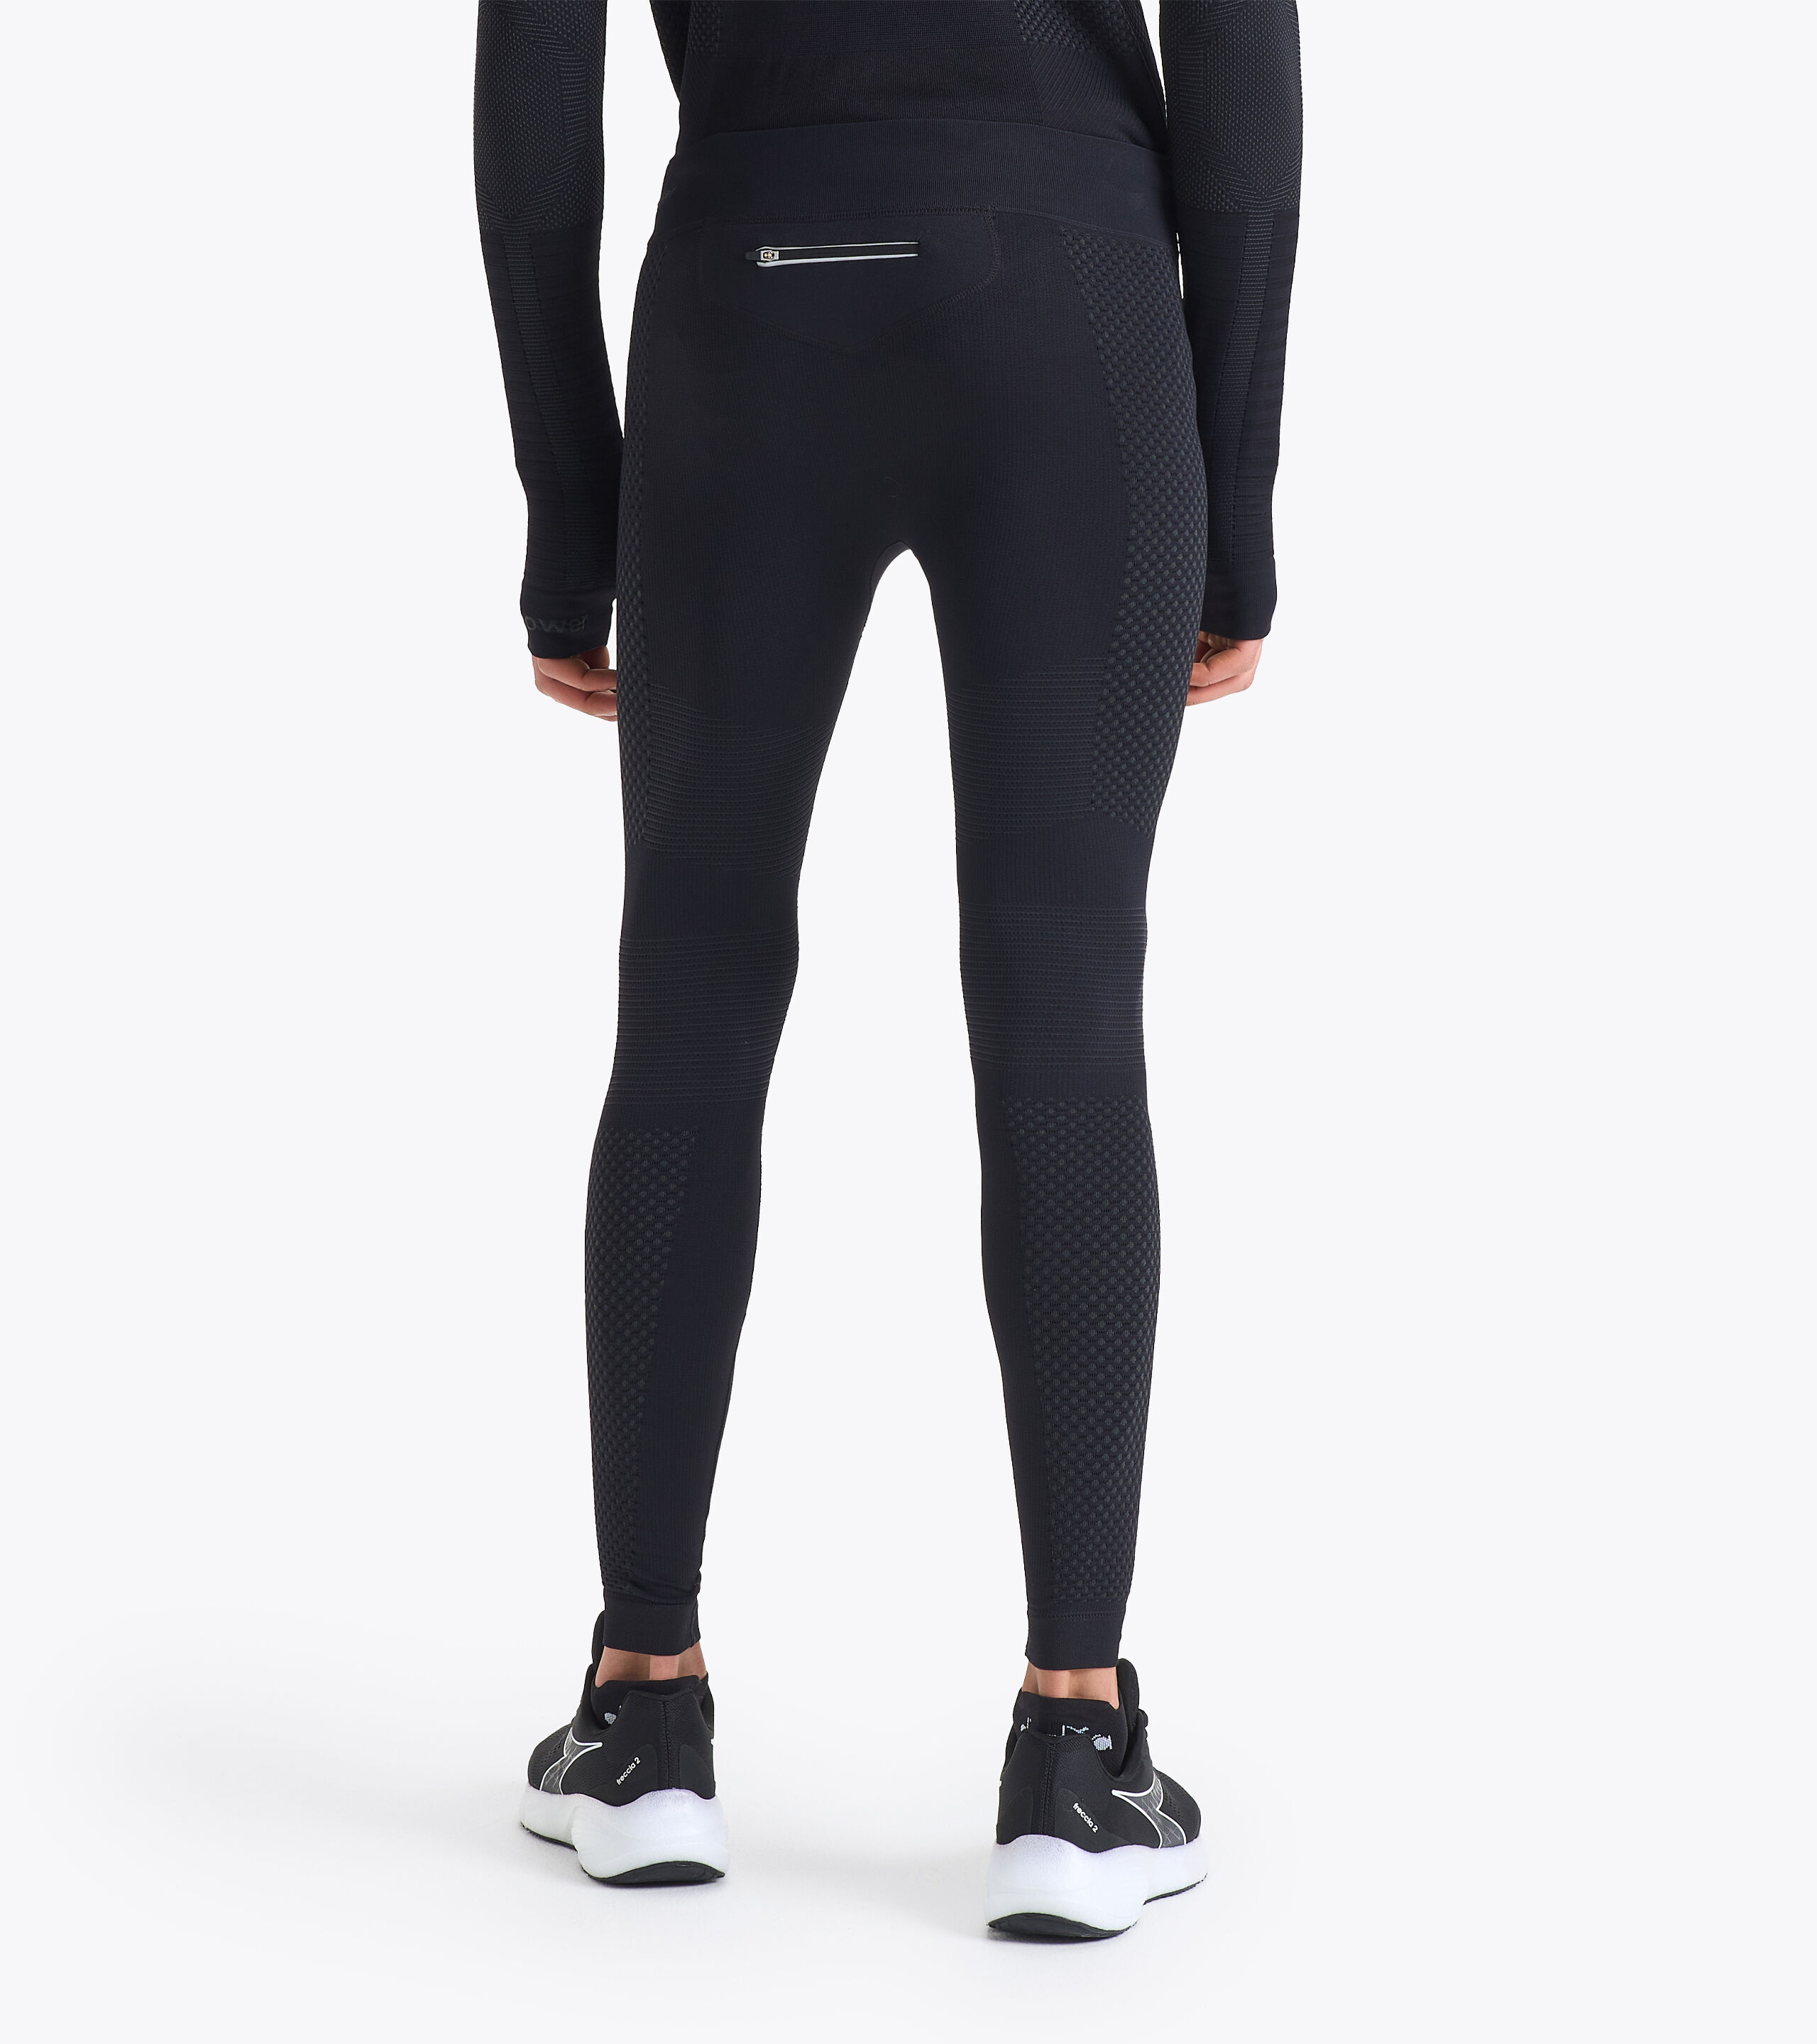 Mens Wetsuit Pants Neoprene Tight Trousers for Winter Swimming Snorkeling   eBay